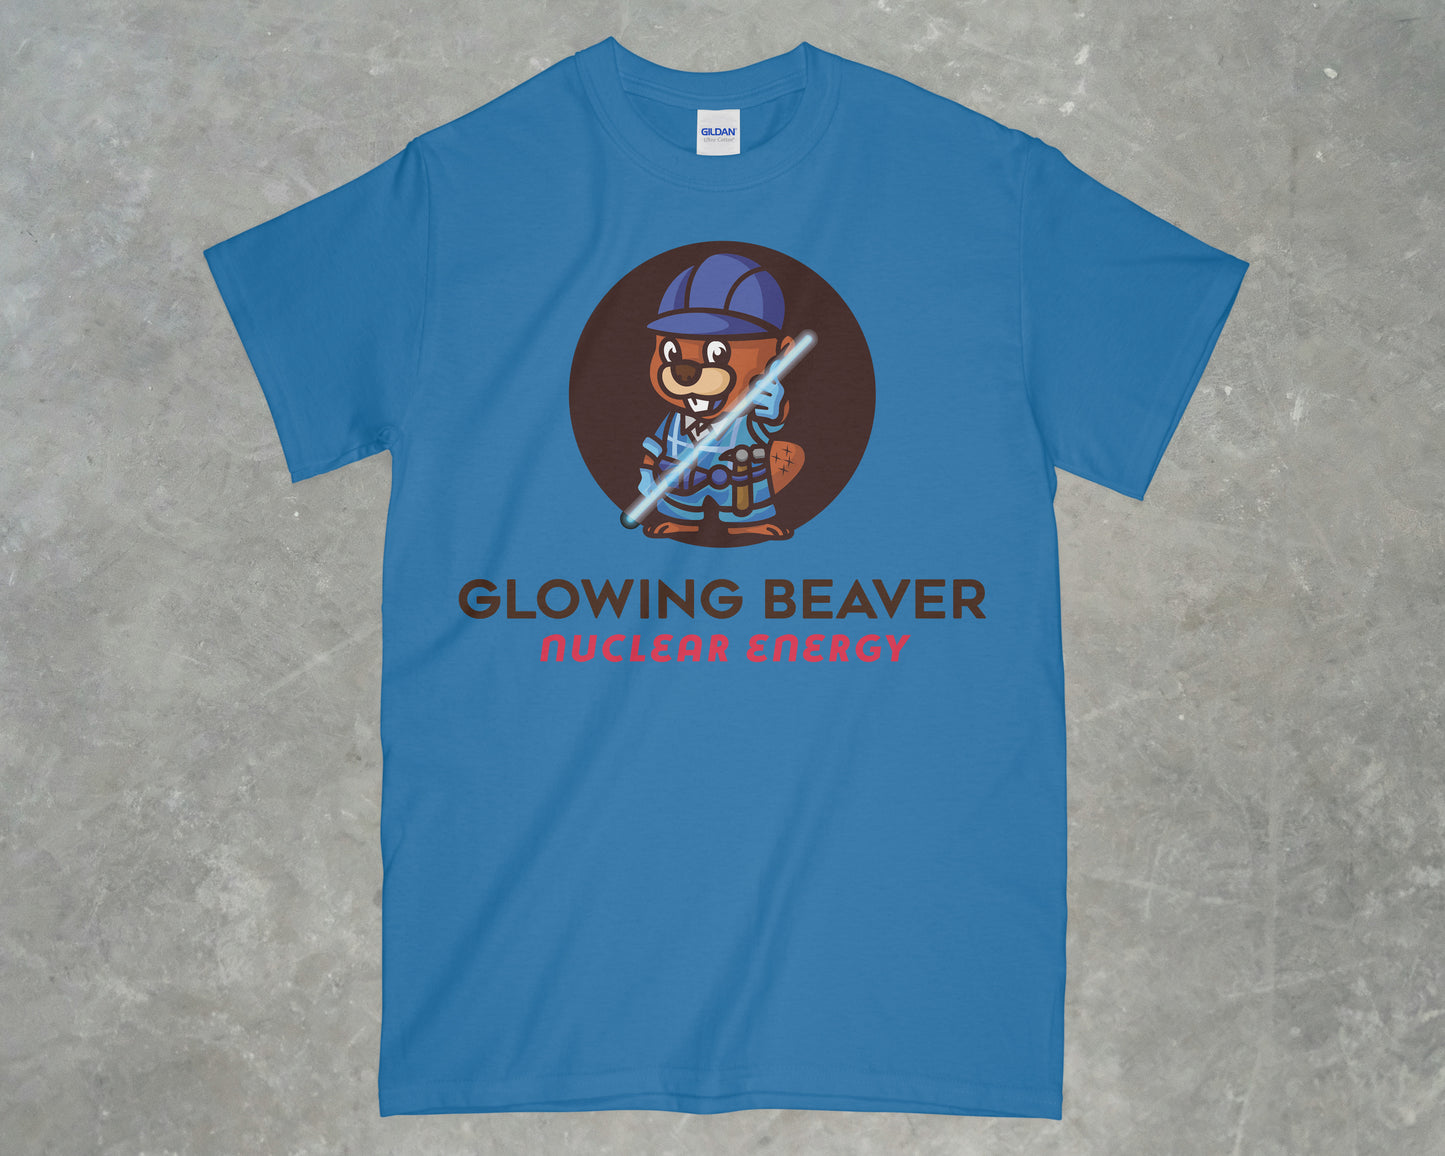 Glowing Beaver Shirt